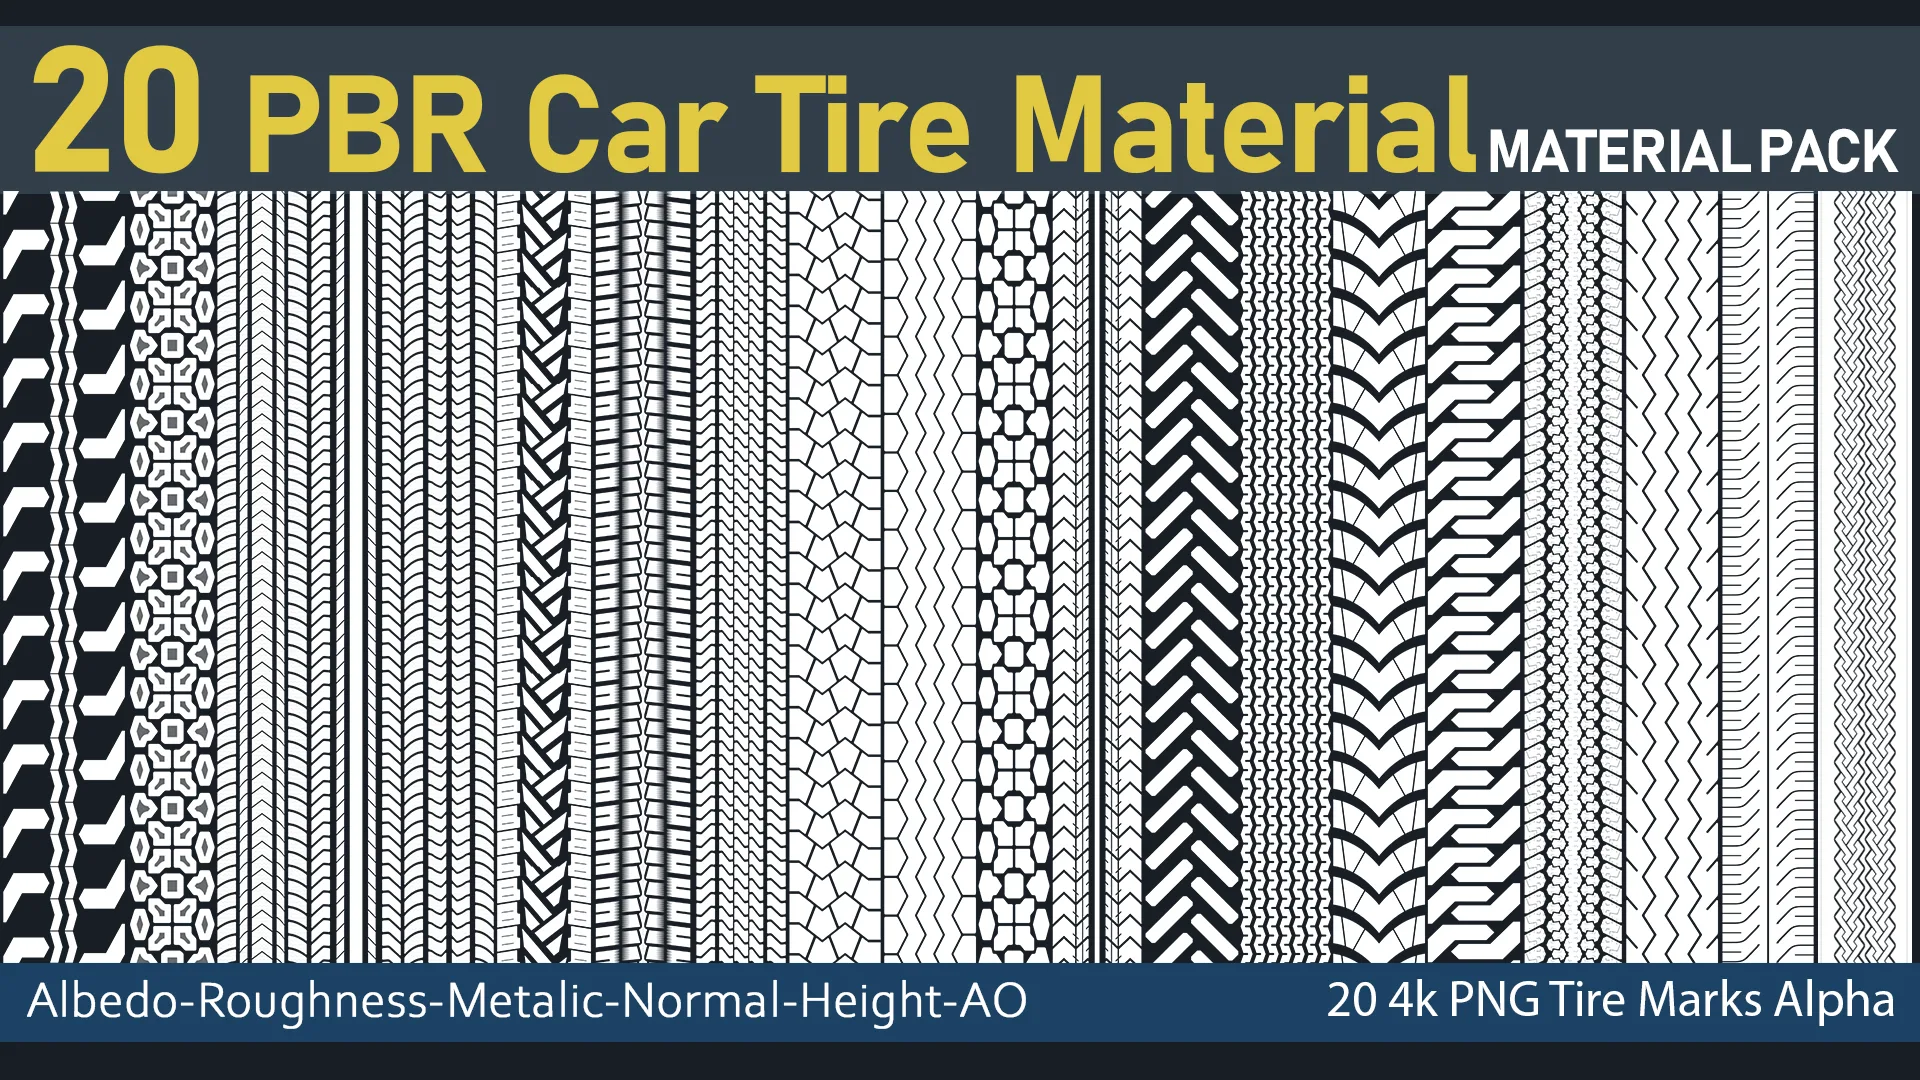 20 PBR Car Tire Material